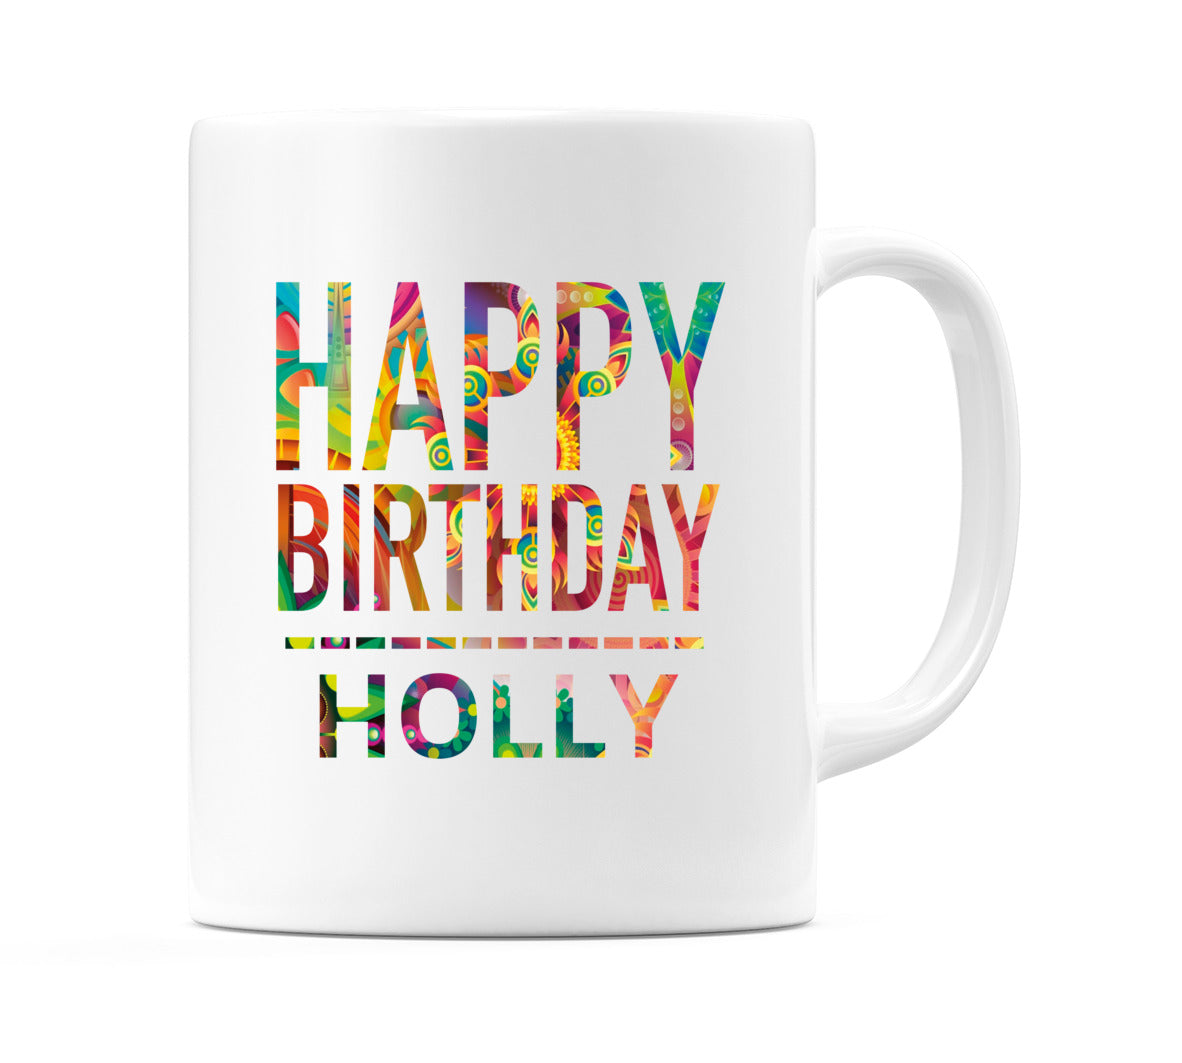 Happy Birthday Holly (Tie Dye Effect) Mug Cup by WeDoMugs